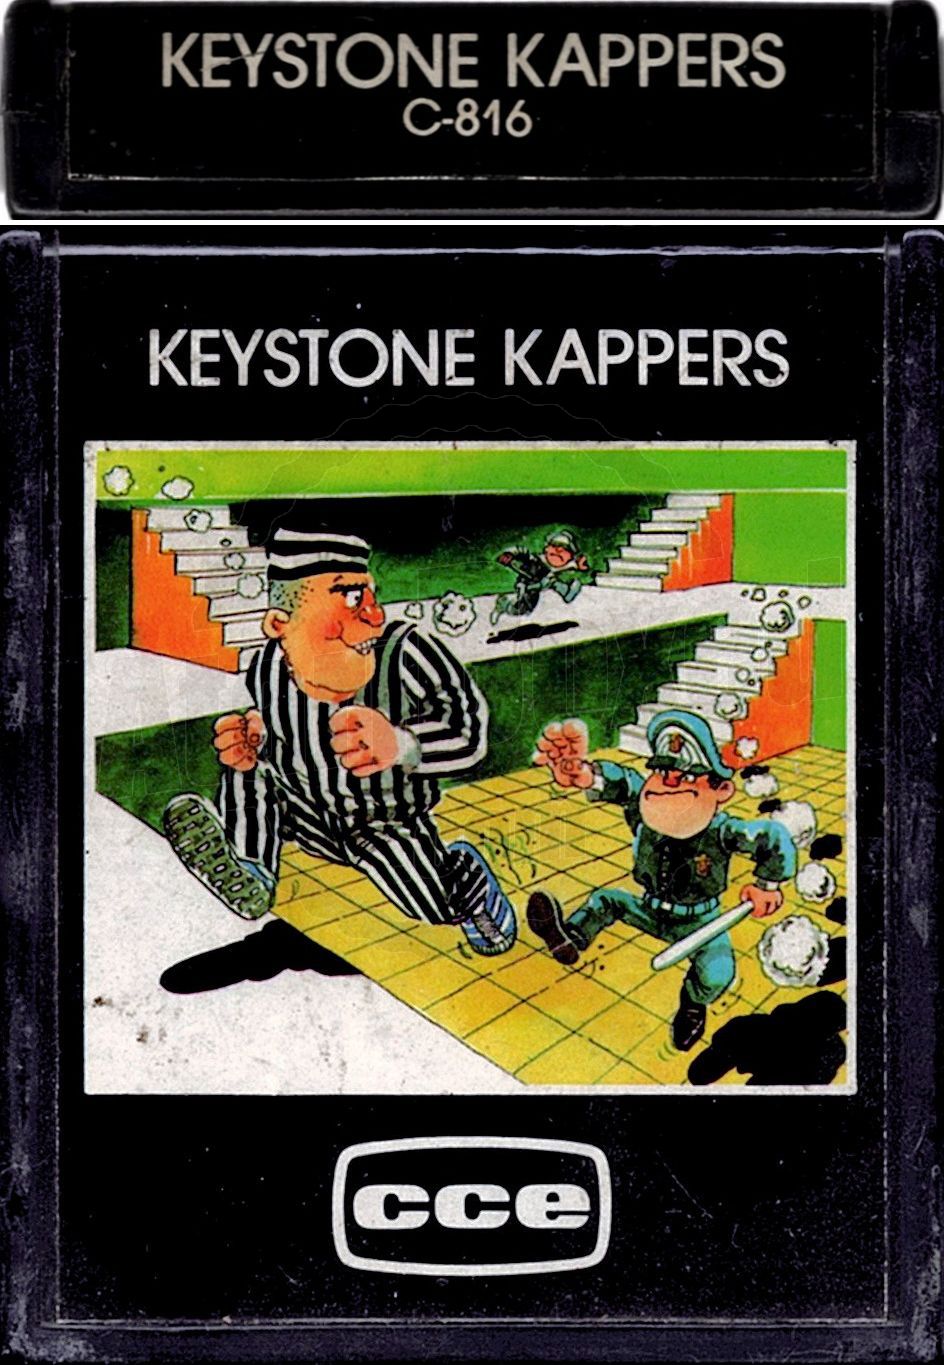 Keystone Kapers - Atari Comparison - 2600 vs 5200 